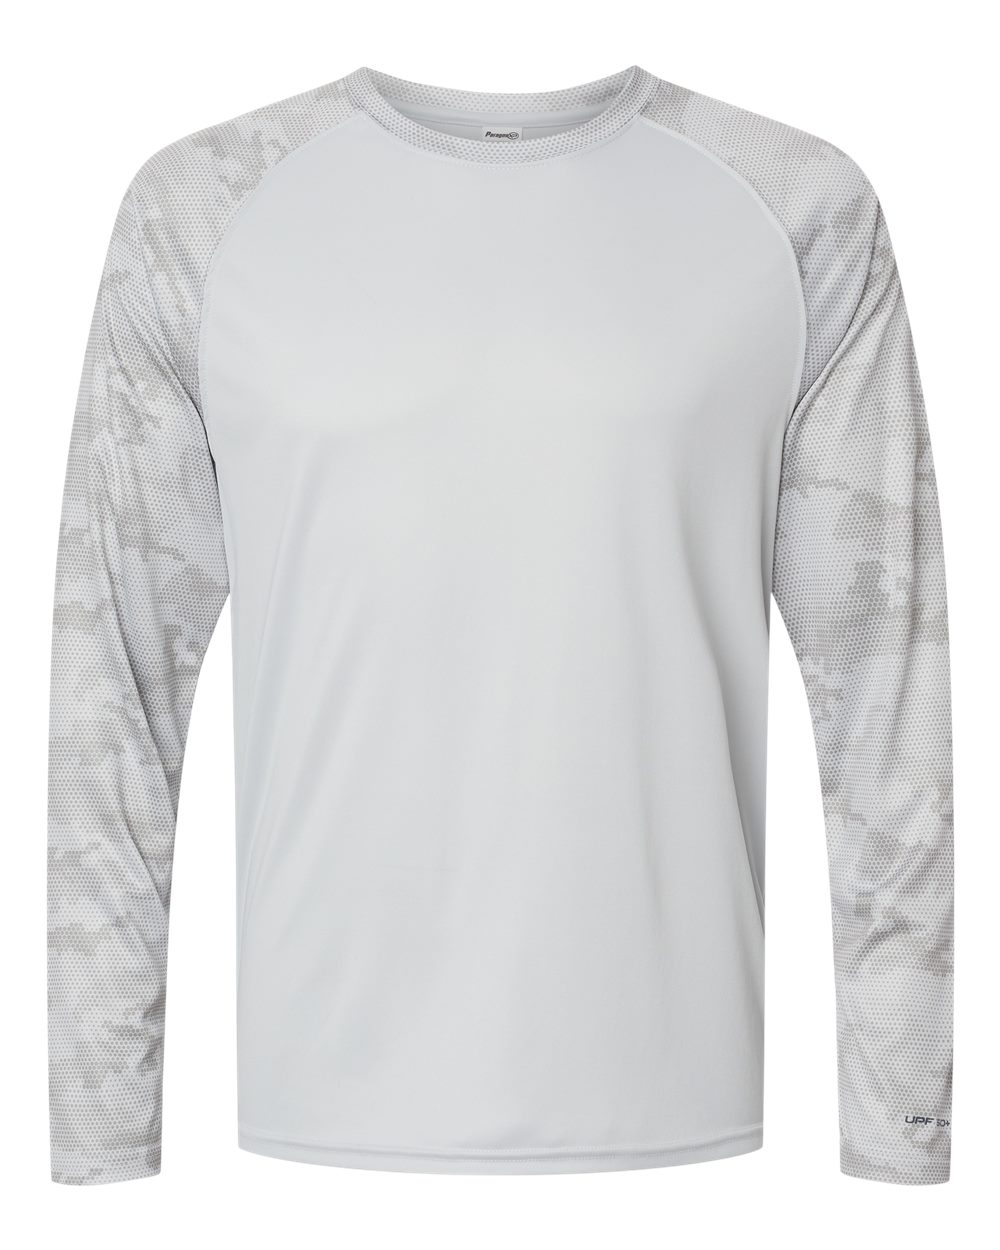 Paragon 216 - Cayman Performance Camo Colorblocked Long Sleeve T-Shirt